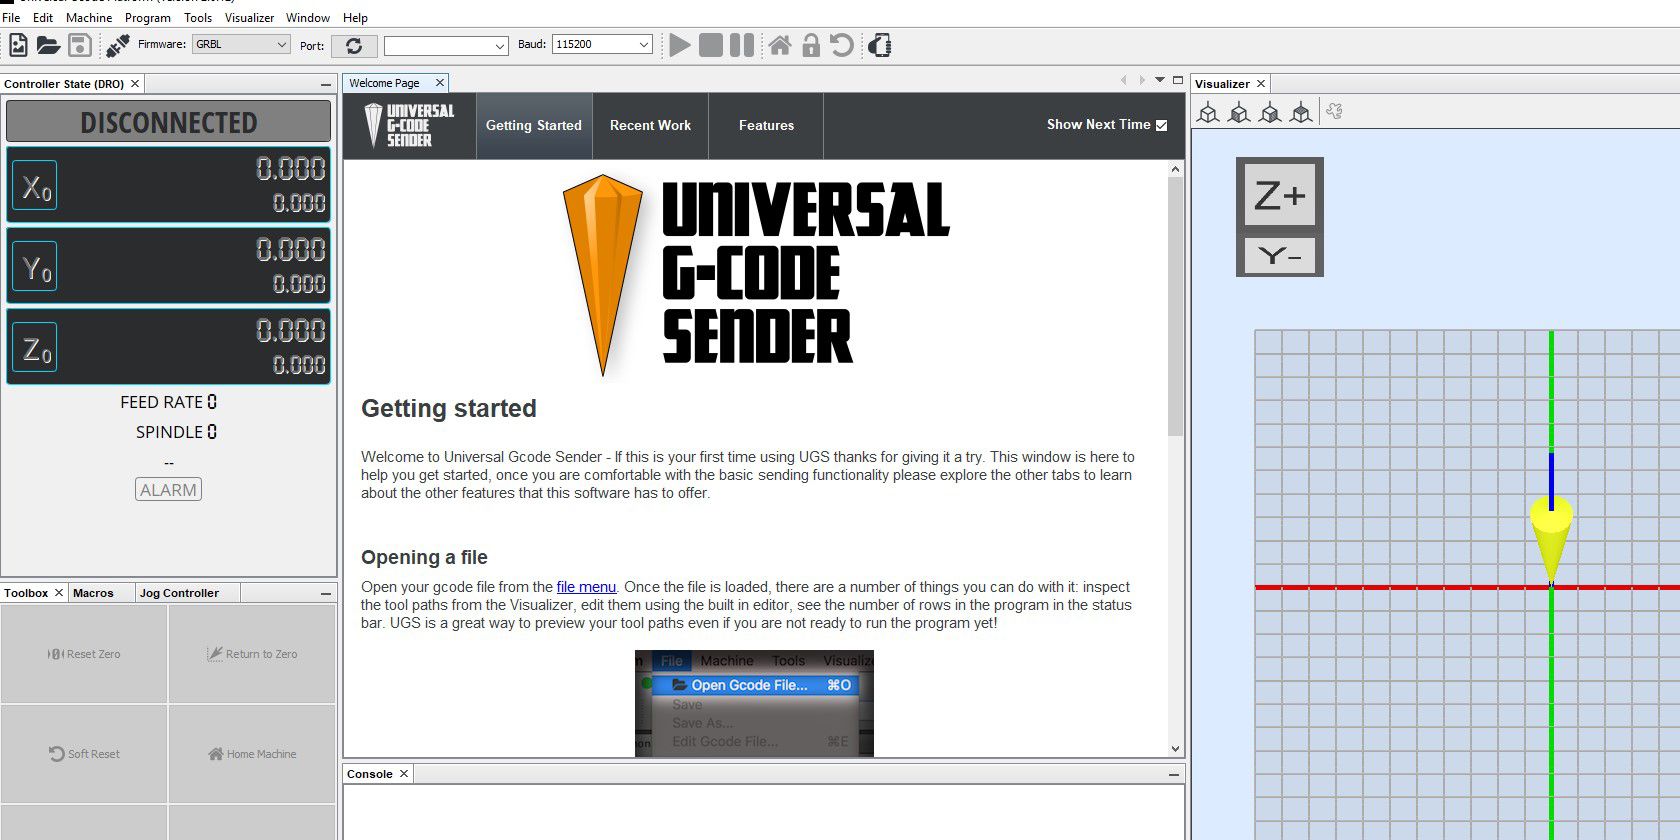 The user interface of Universal G-Code Sender